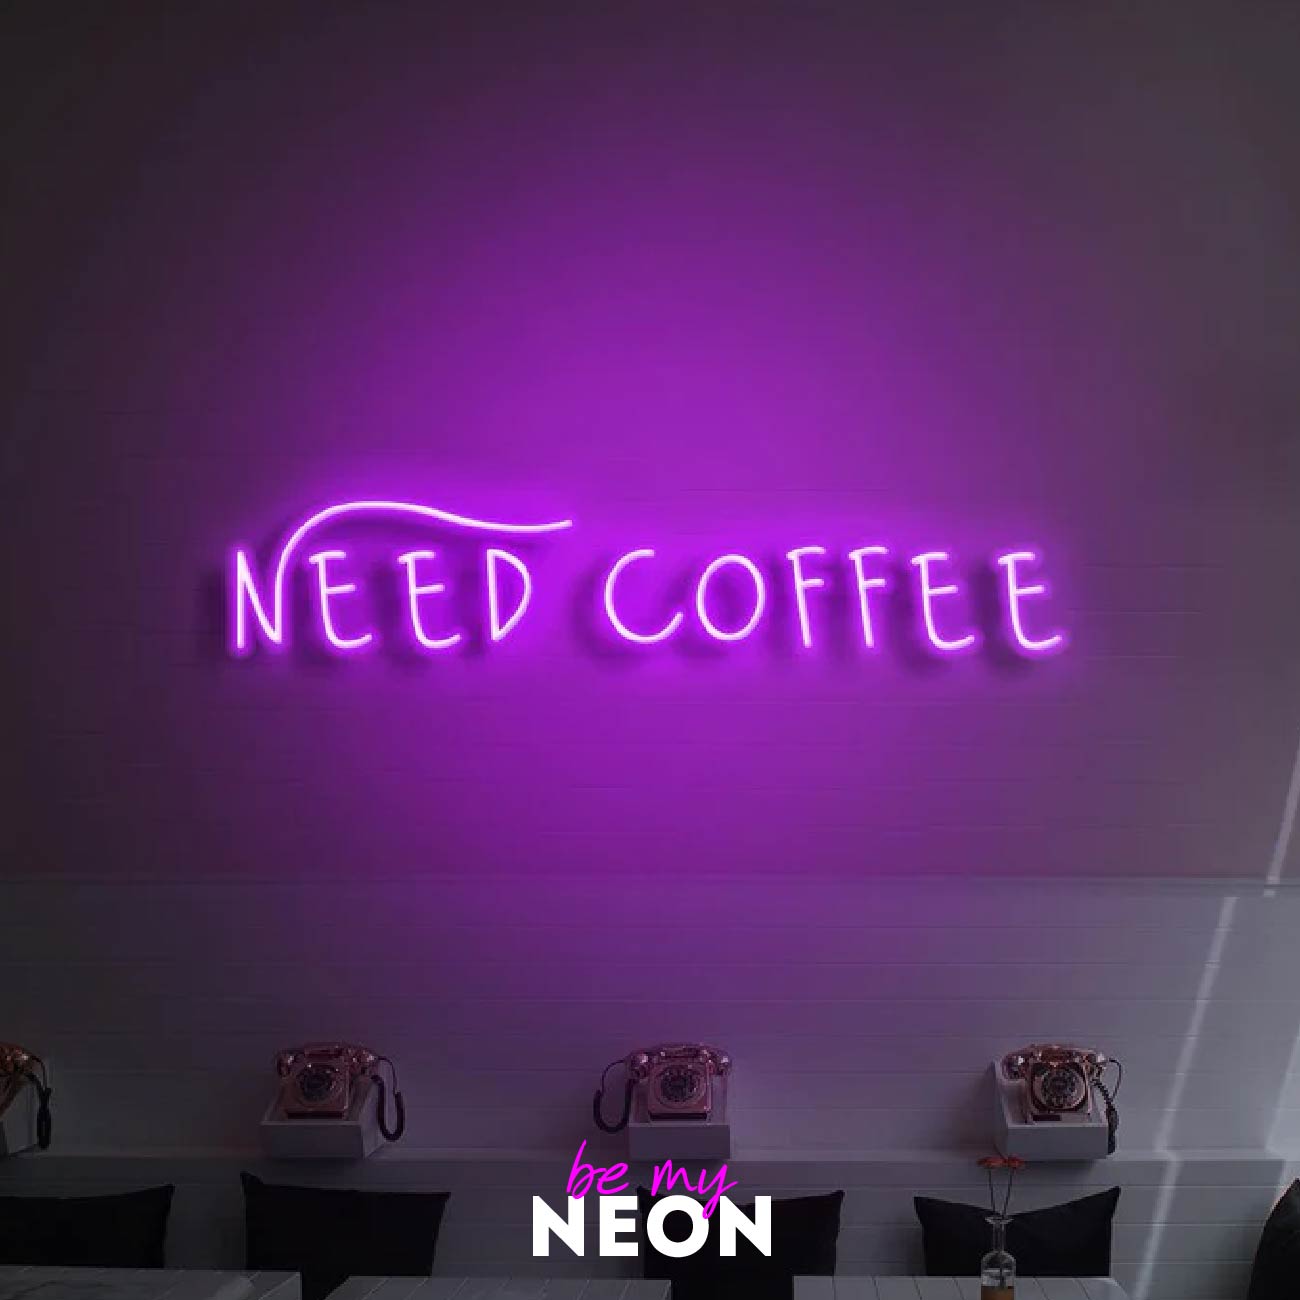 "Need Coffee" LED Neonschild